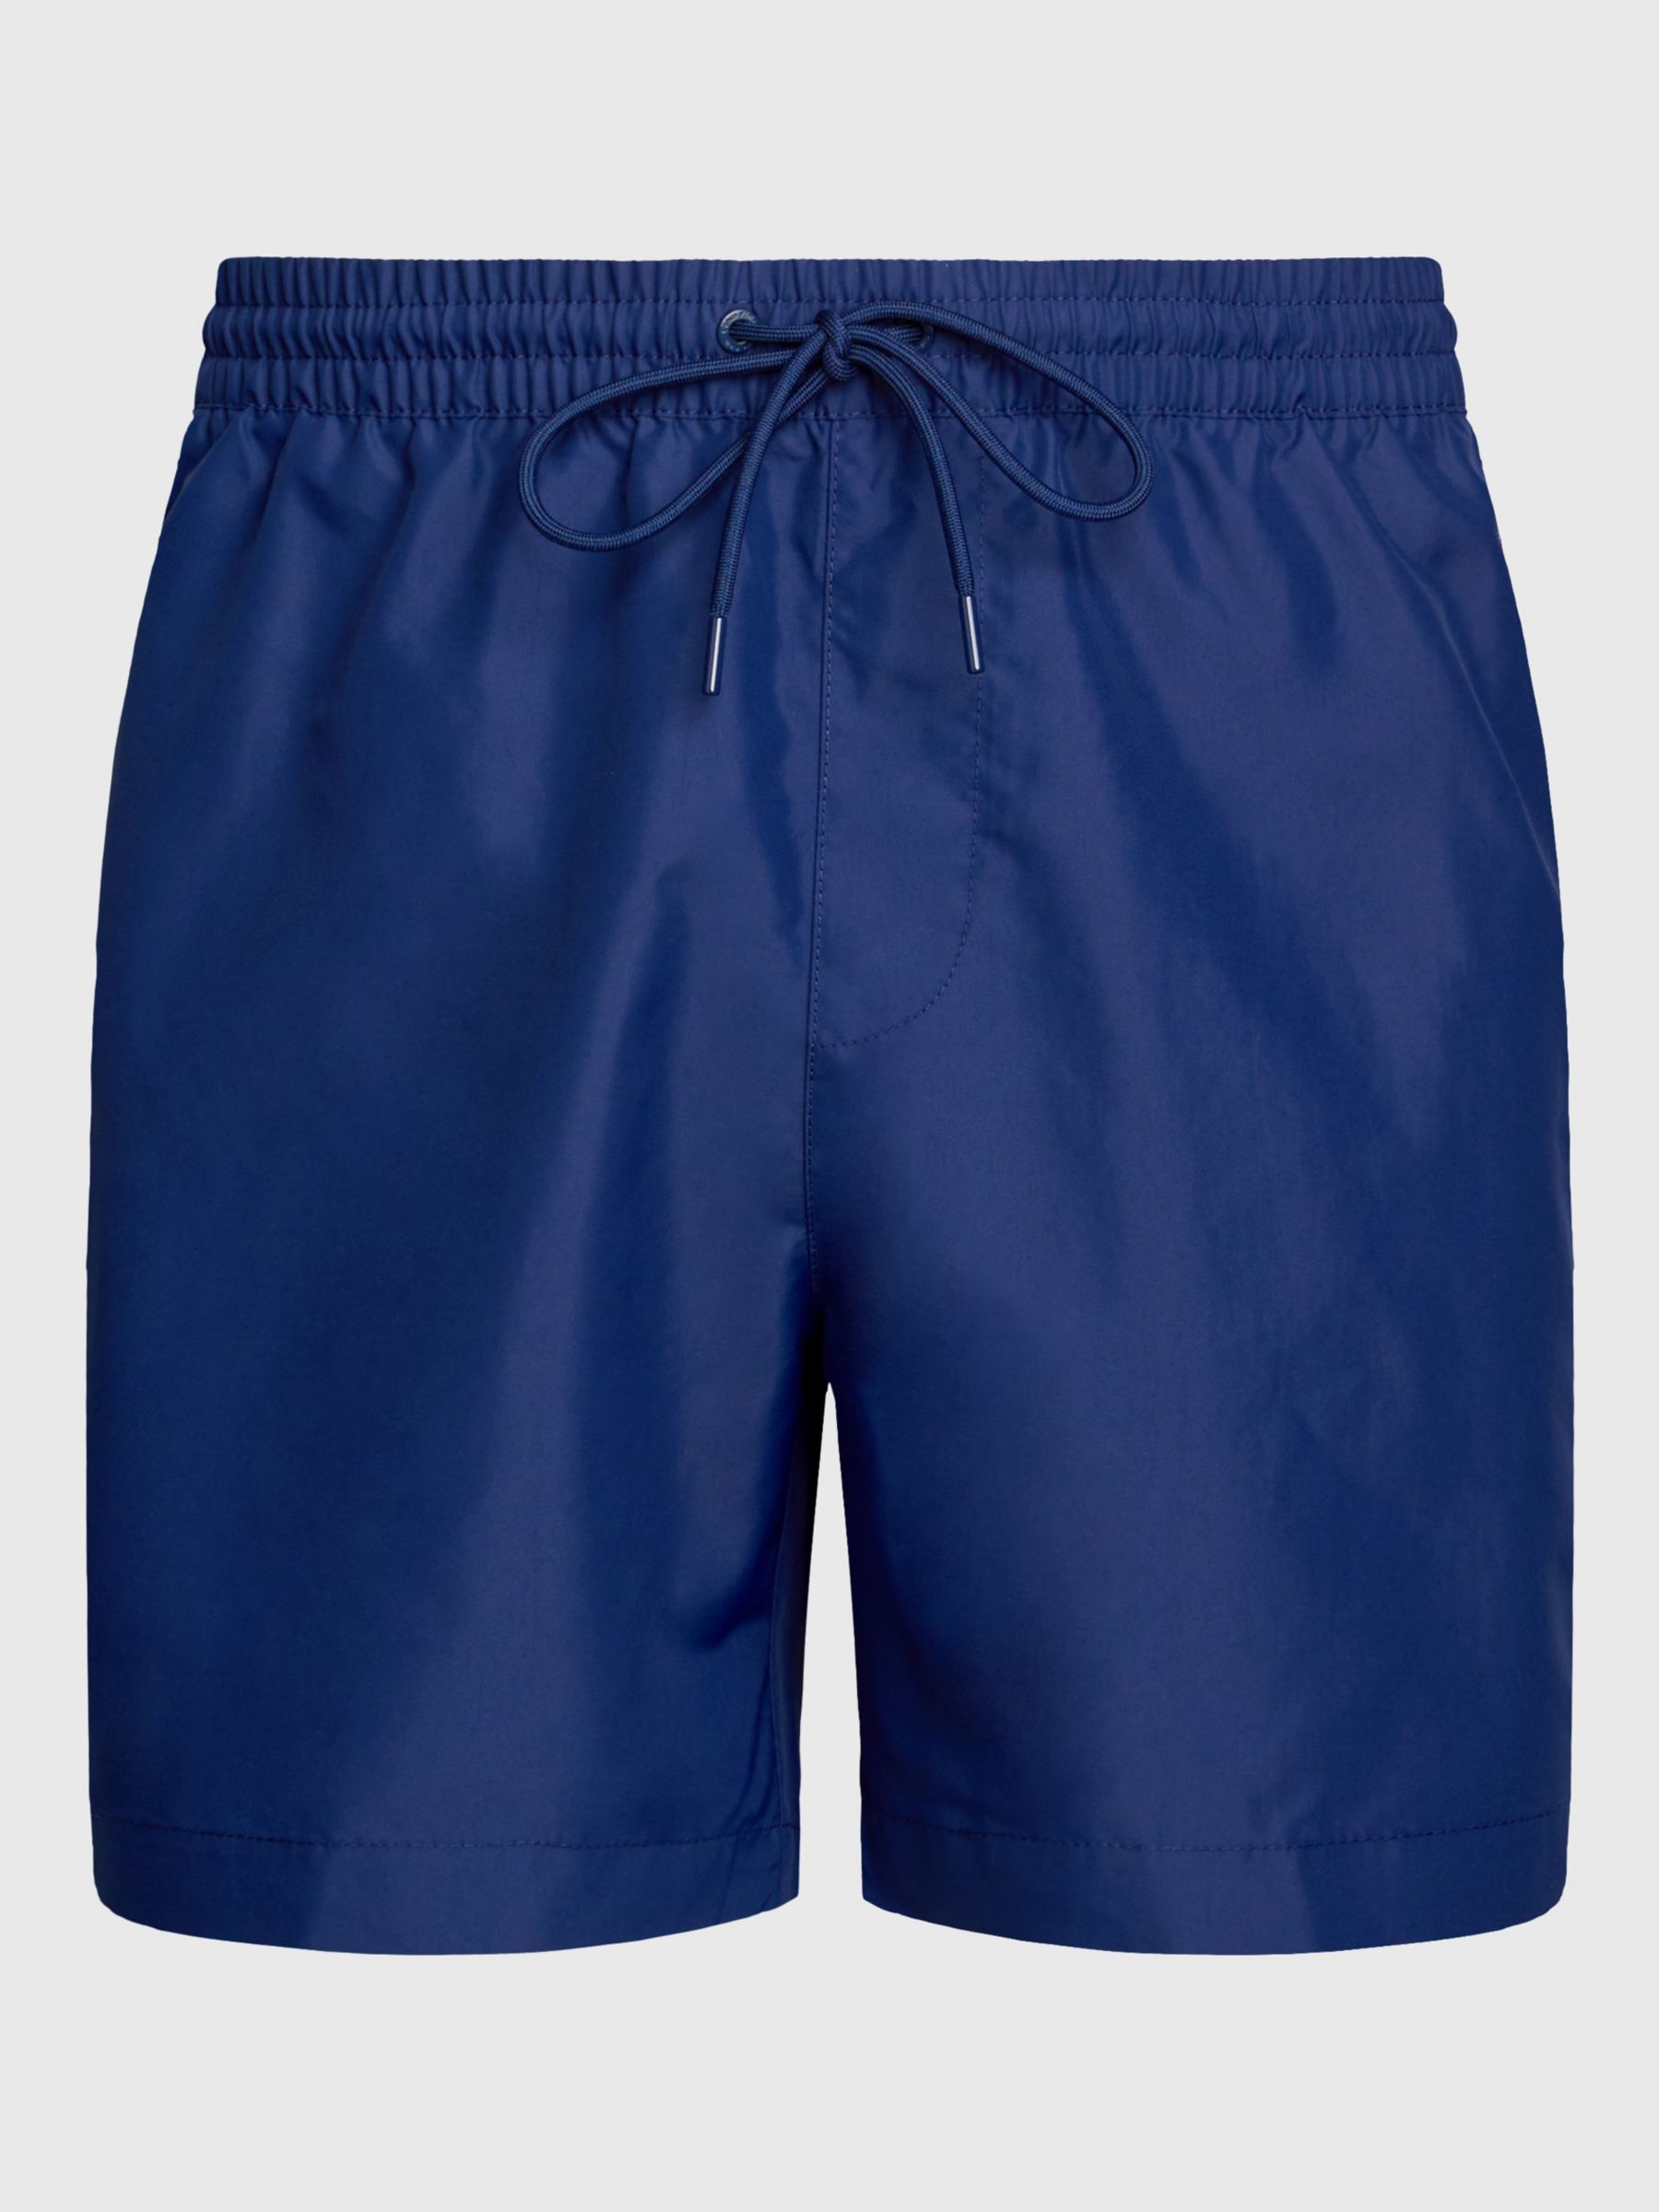 Calvin Klein Drawstring Shorts, Signature Navy, XL